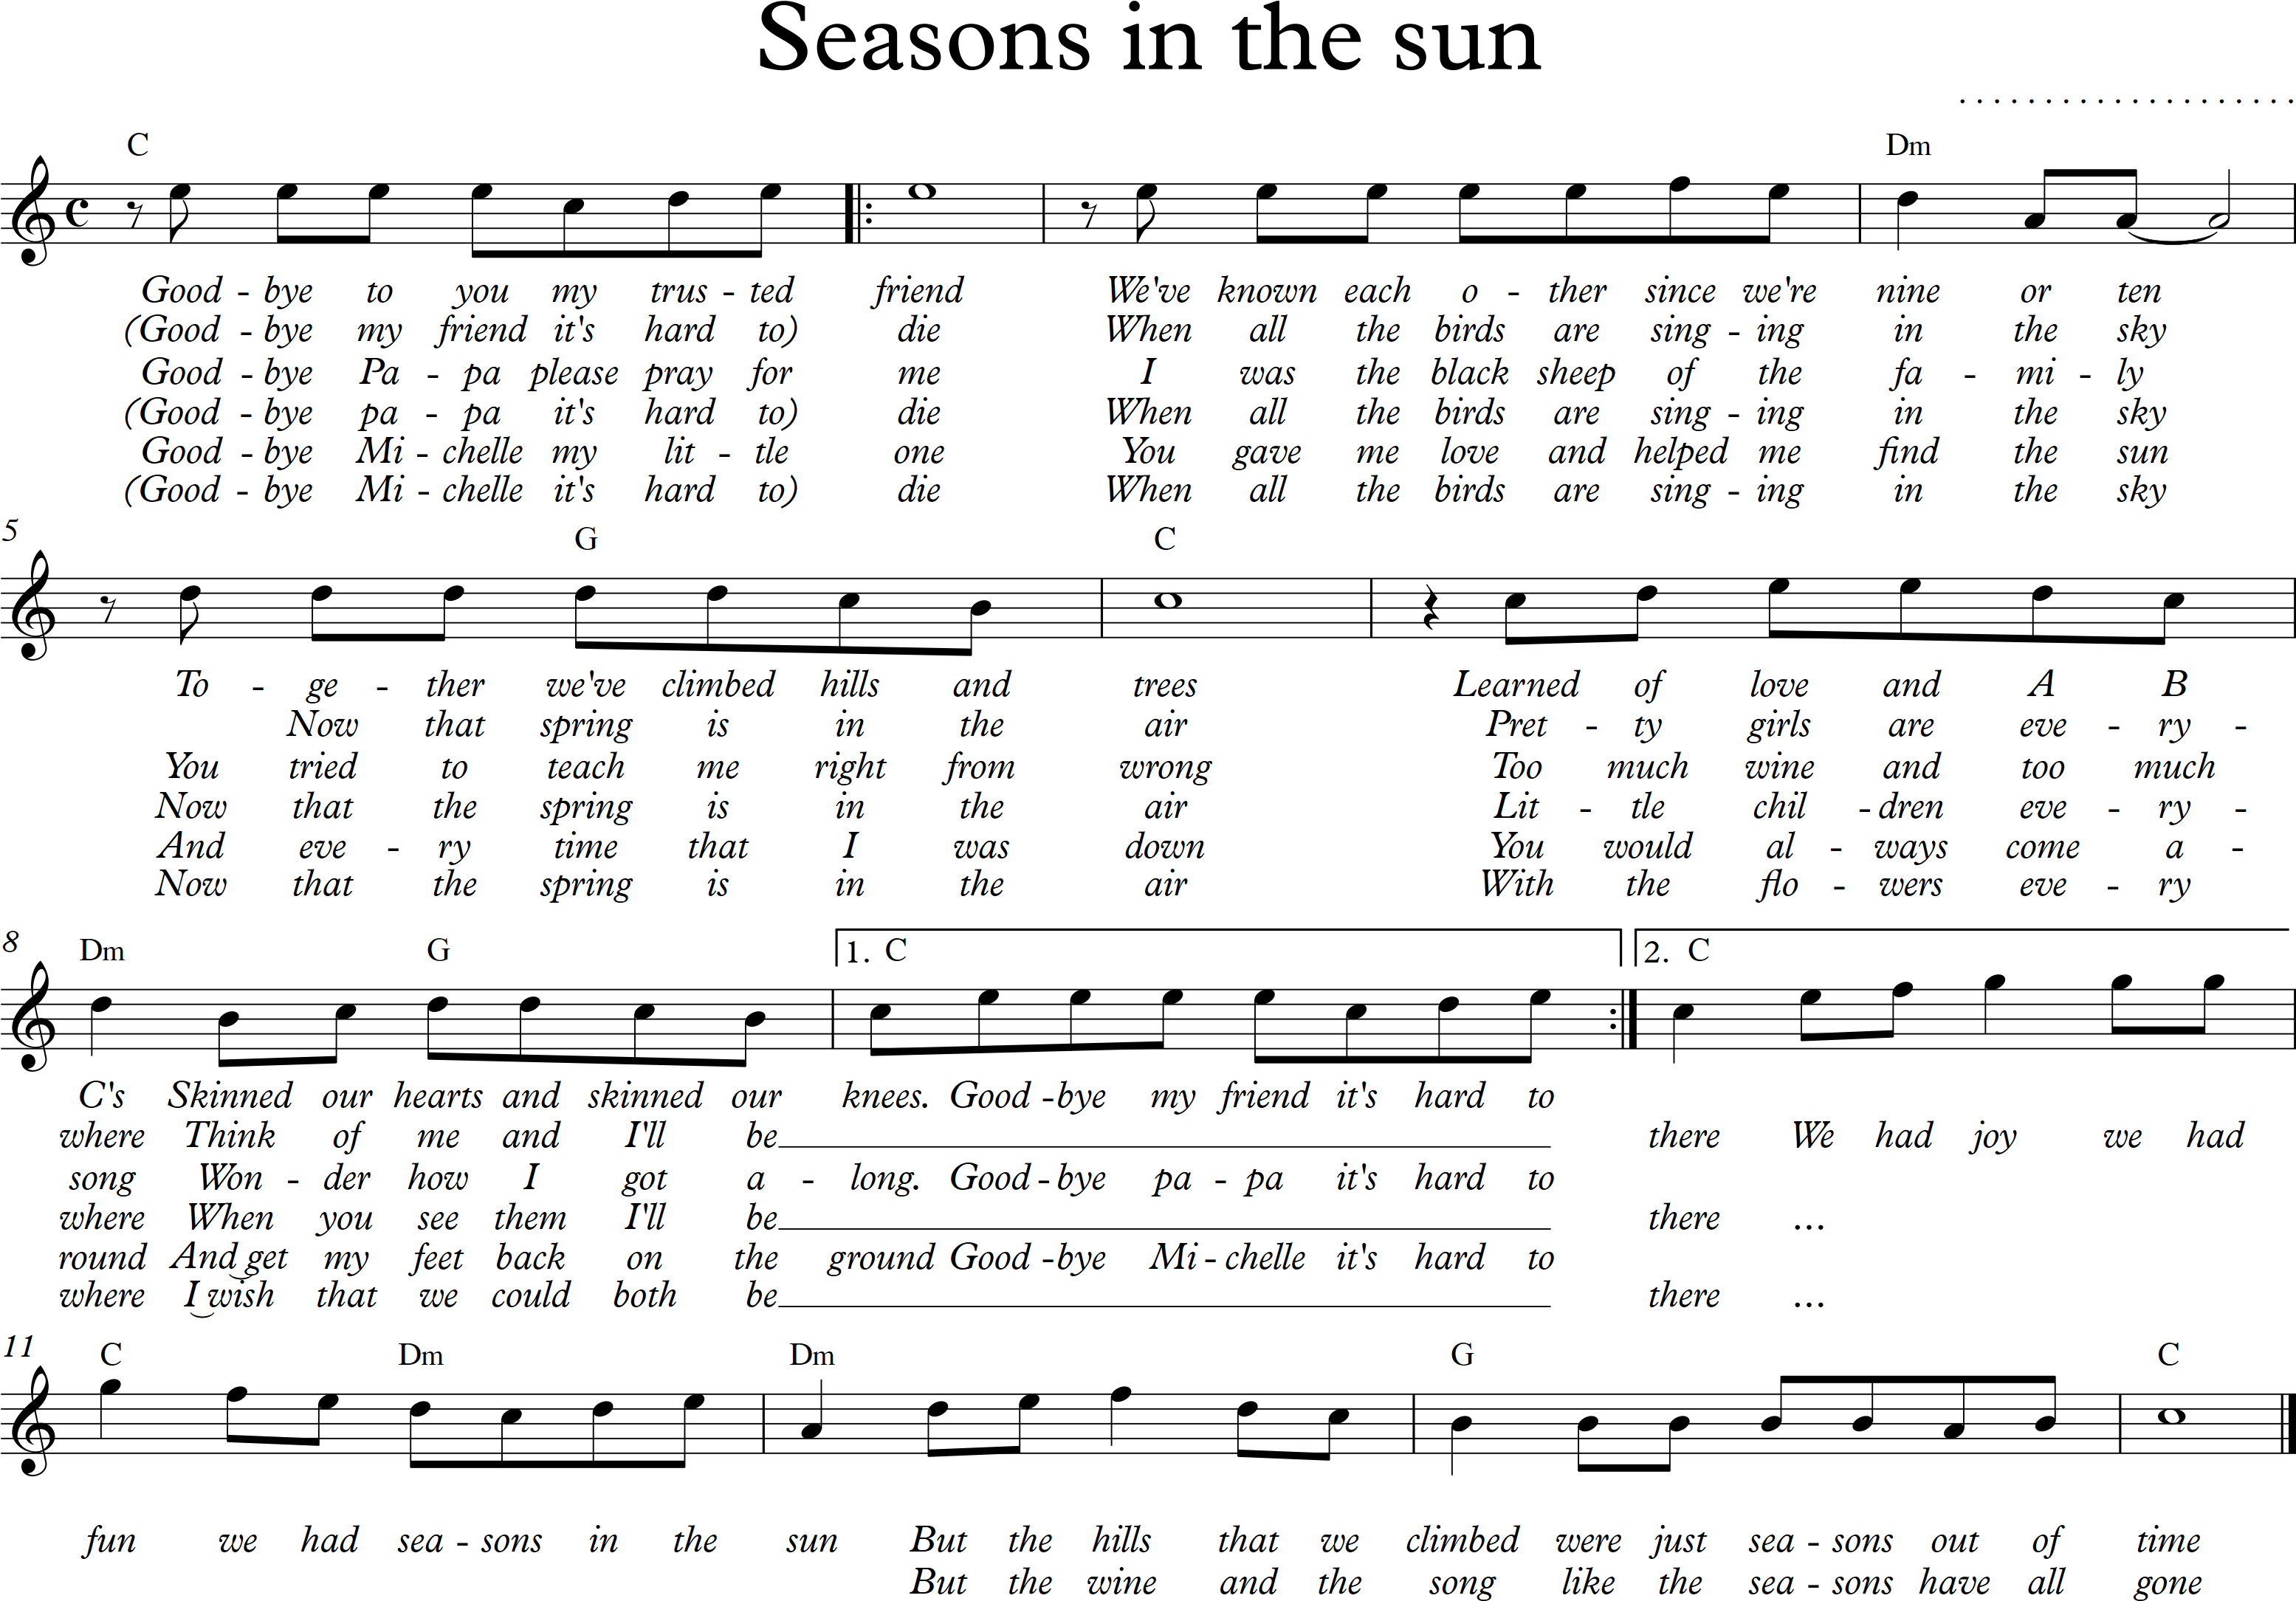 Seasons in the sun - C